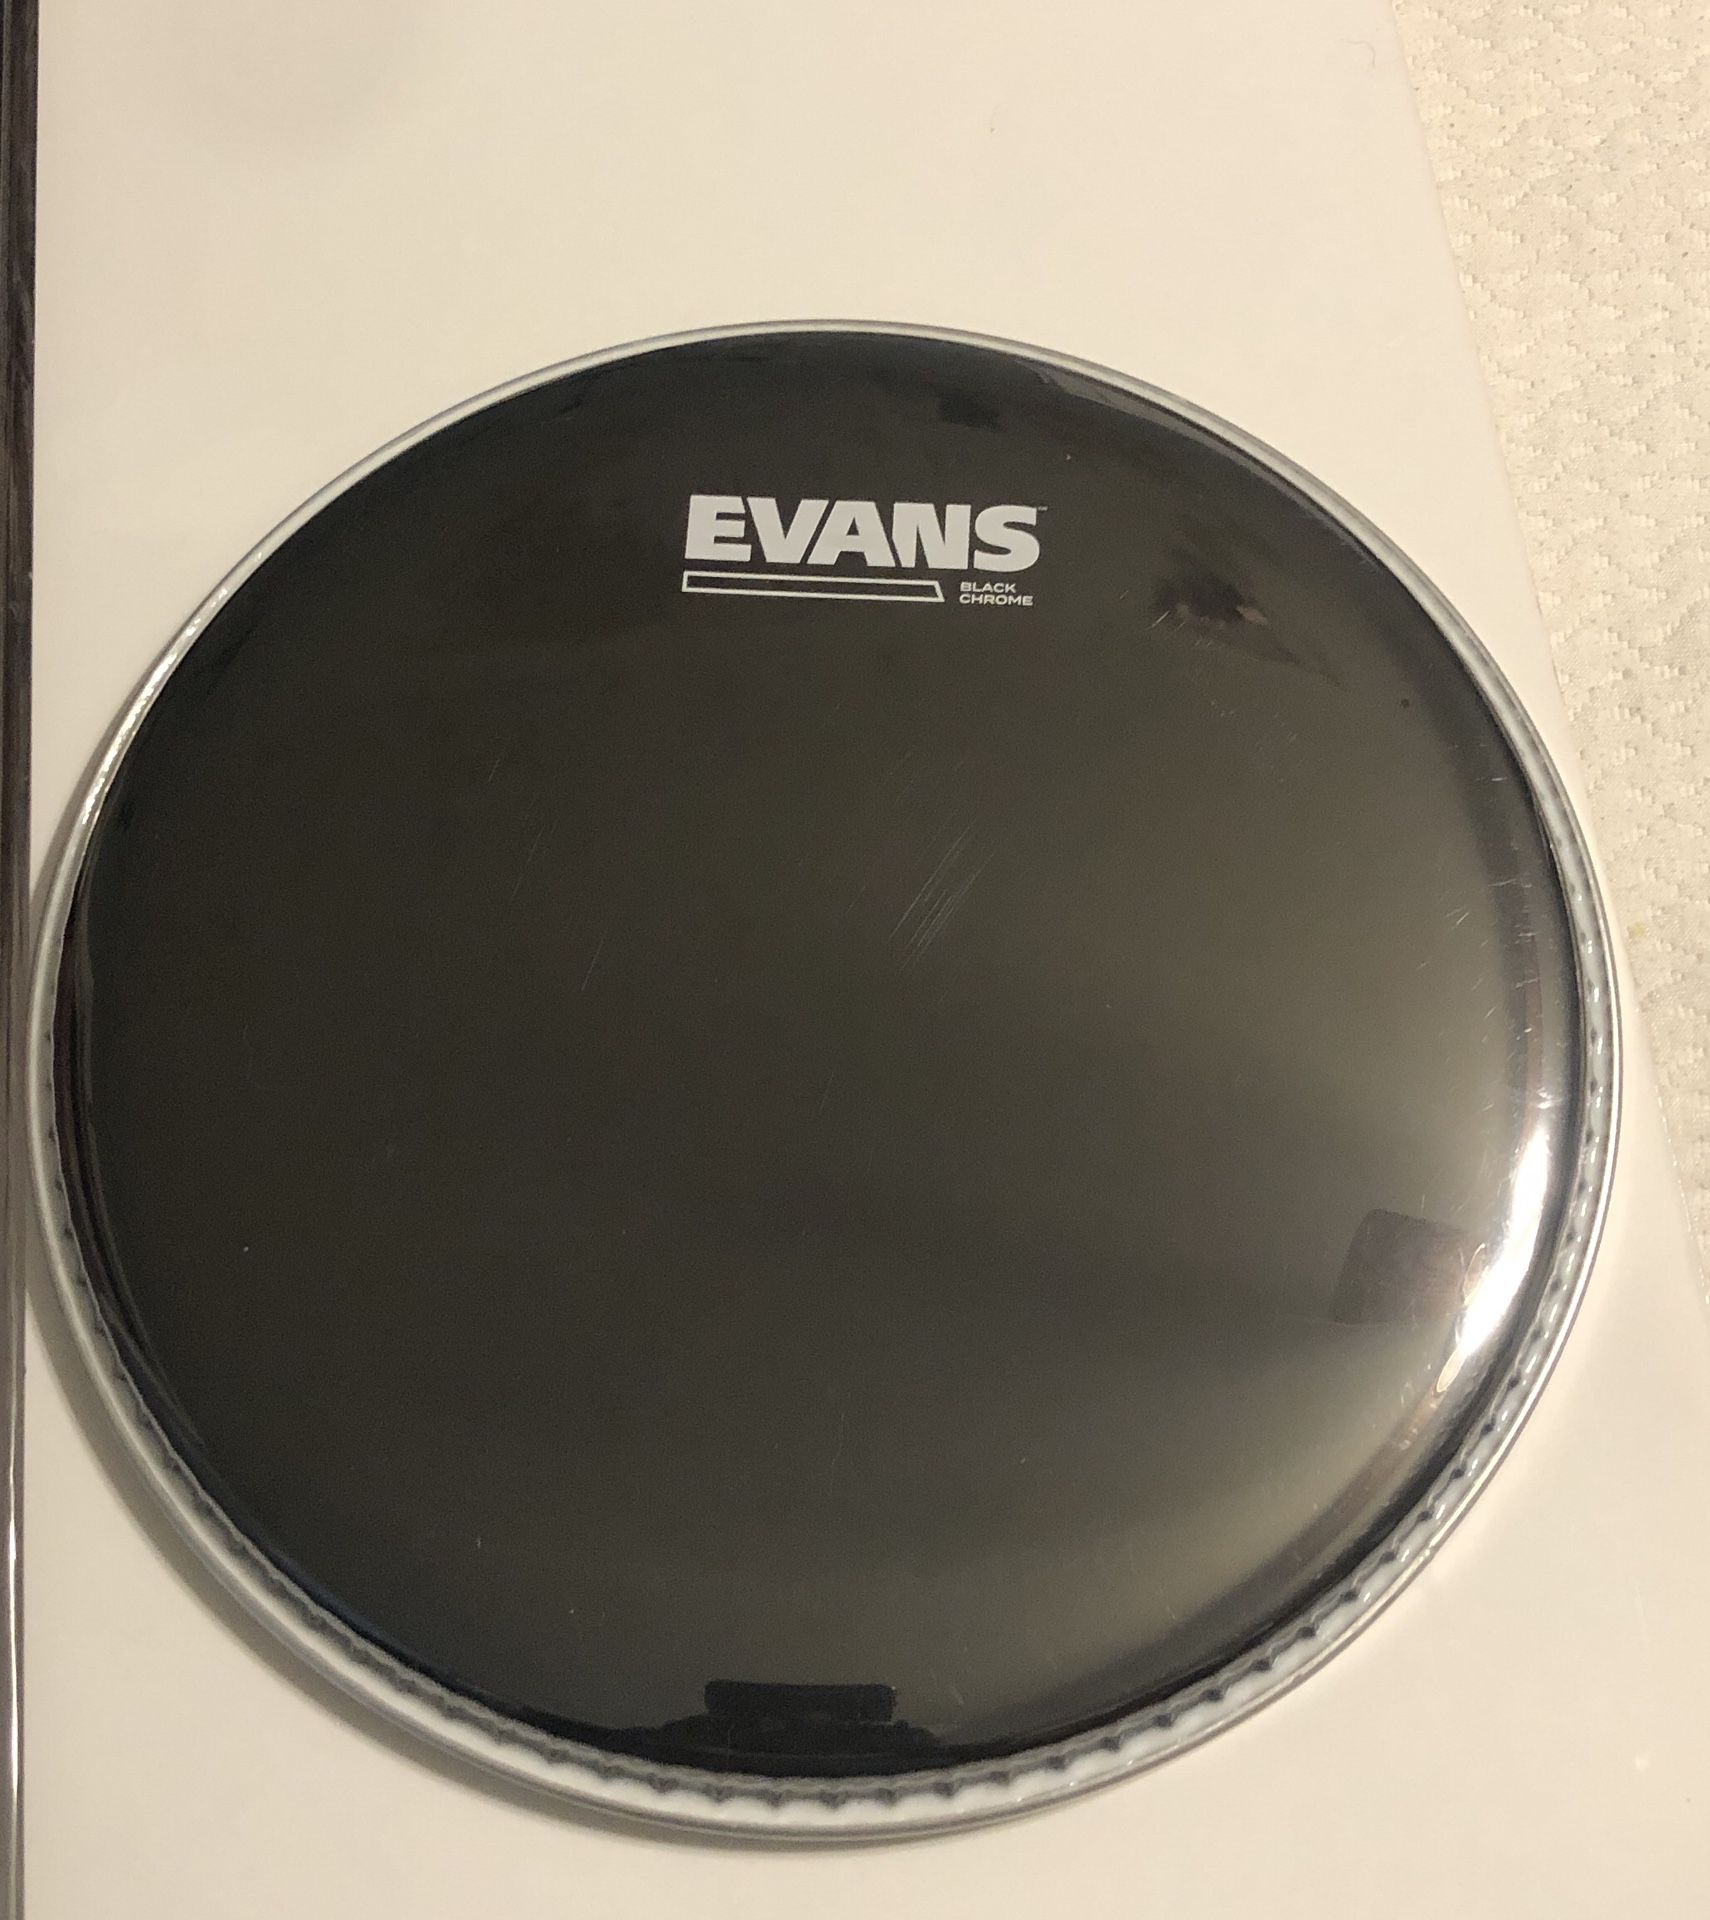 Evans Black Chrome Drum Head - 12” - New